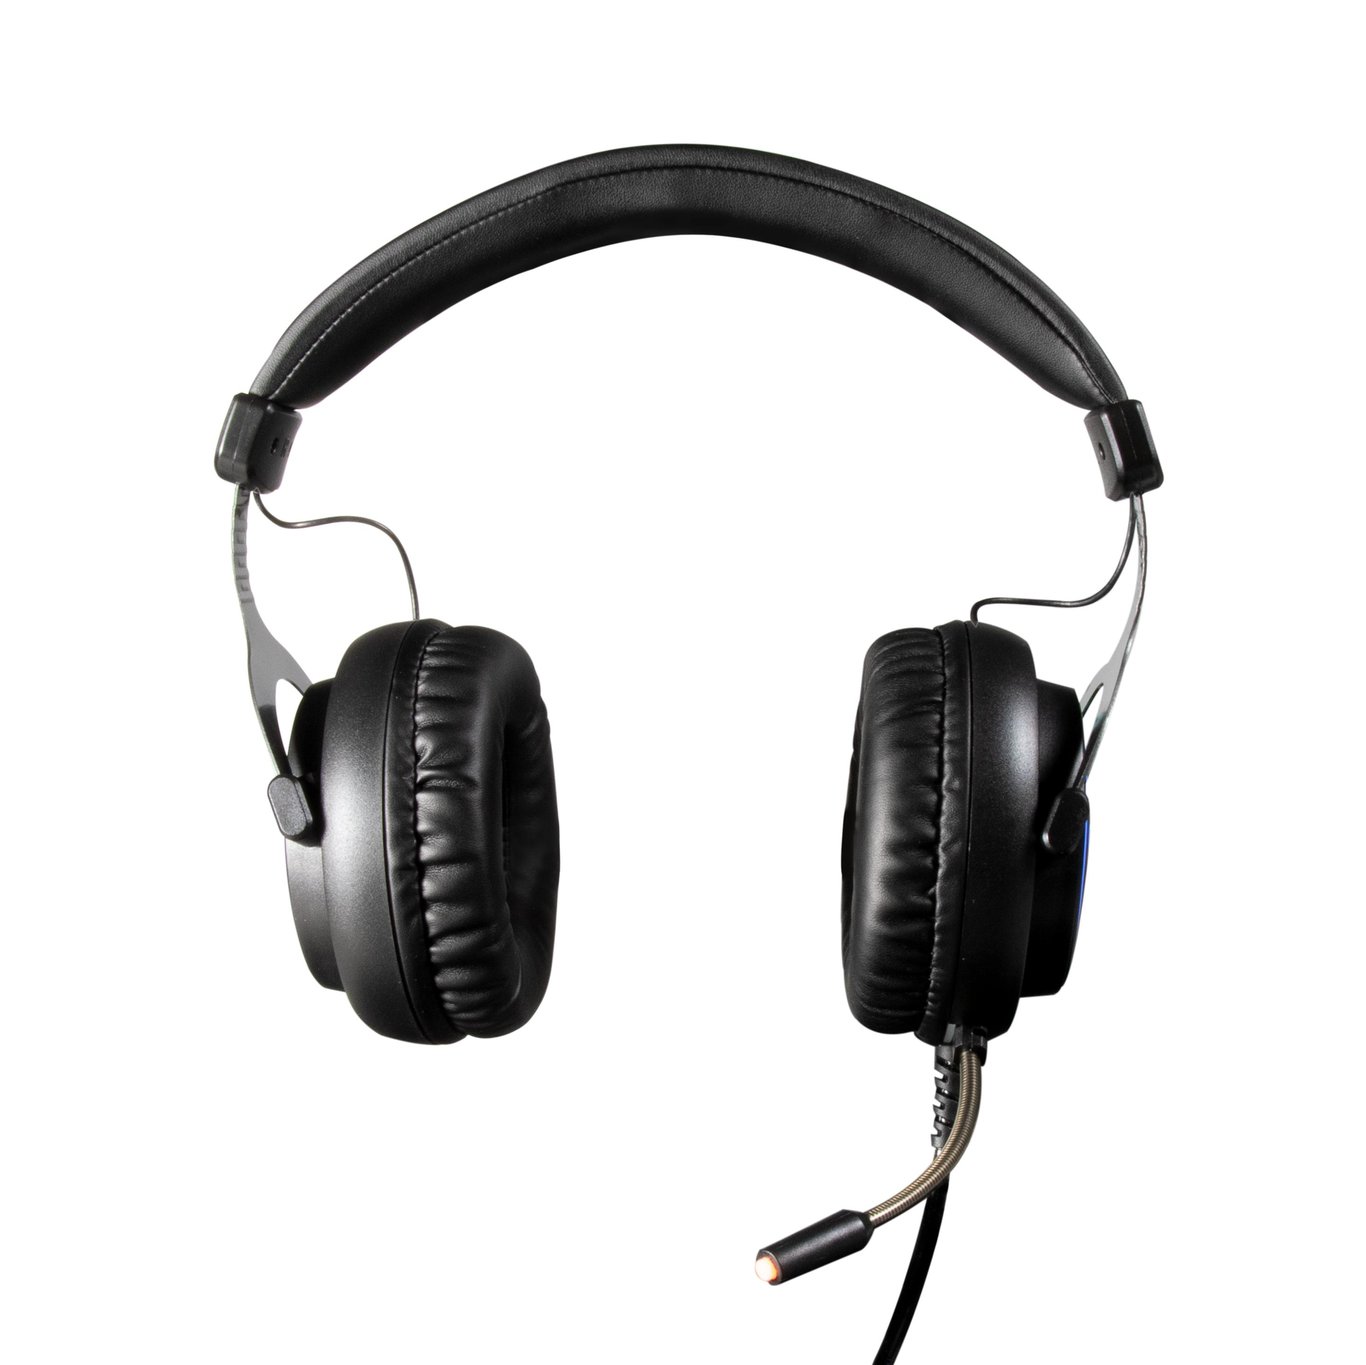 GALAX Gaming Headset SNR-01 電競RGB遊戲耳機